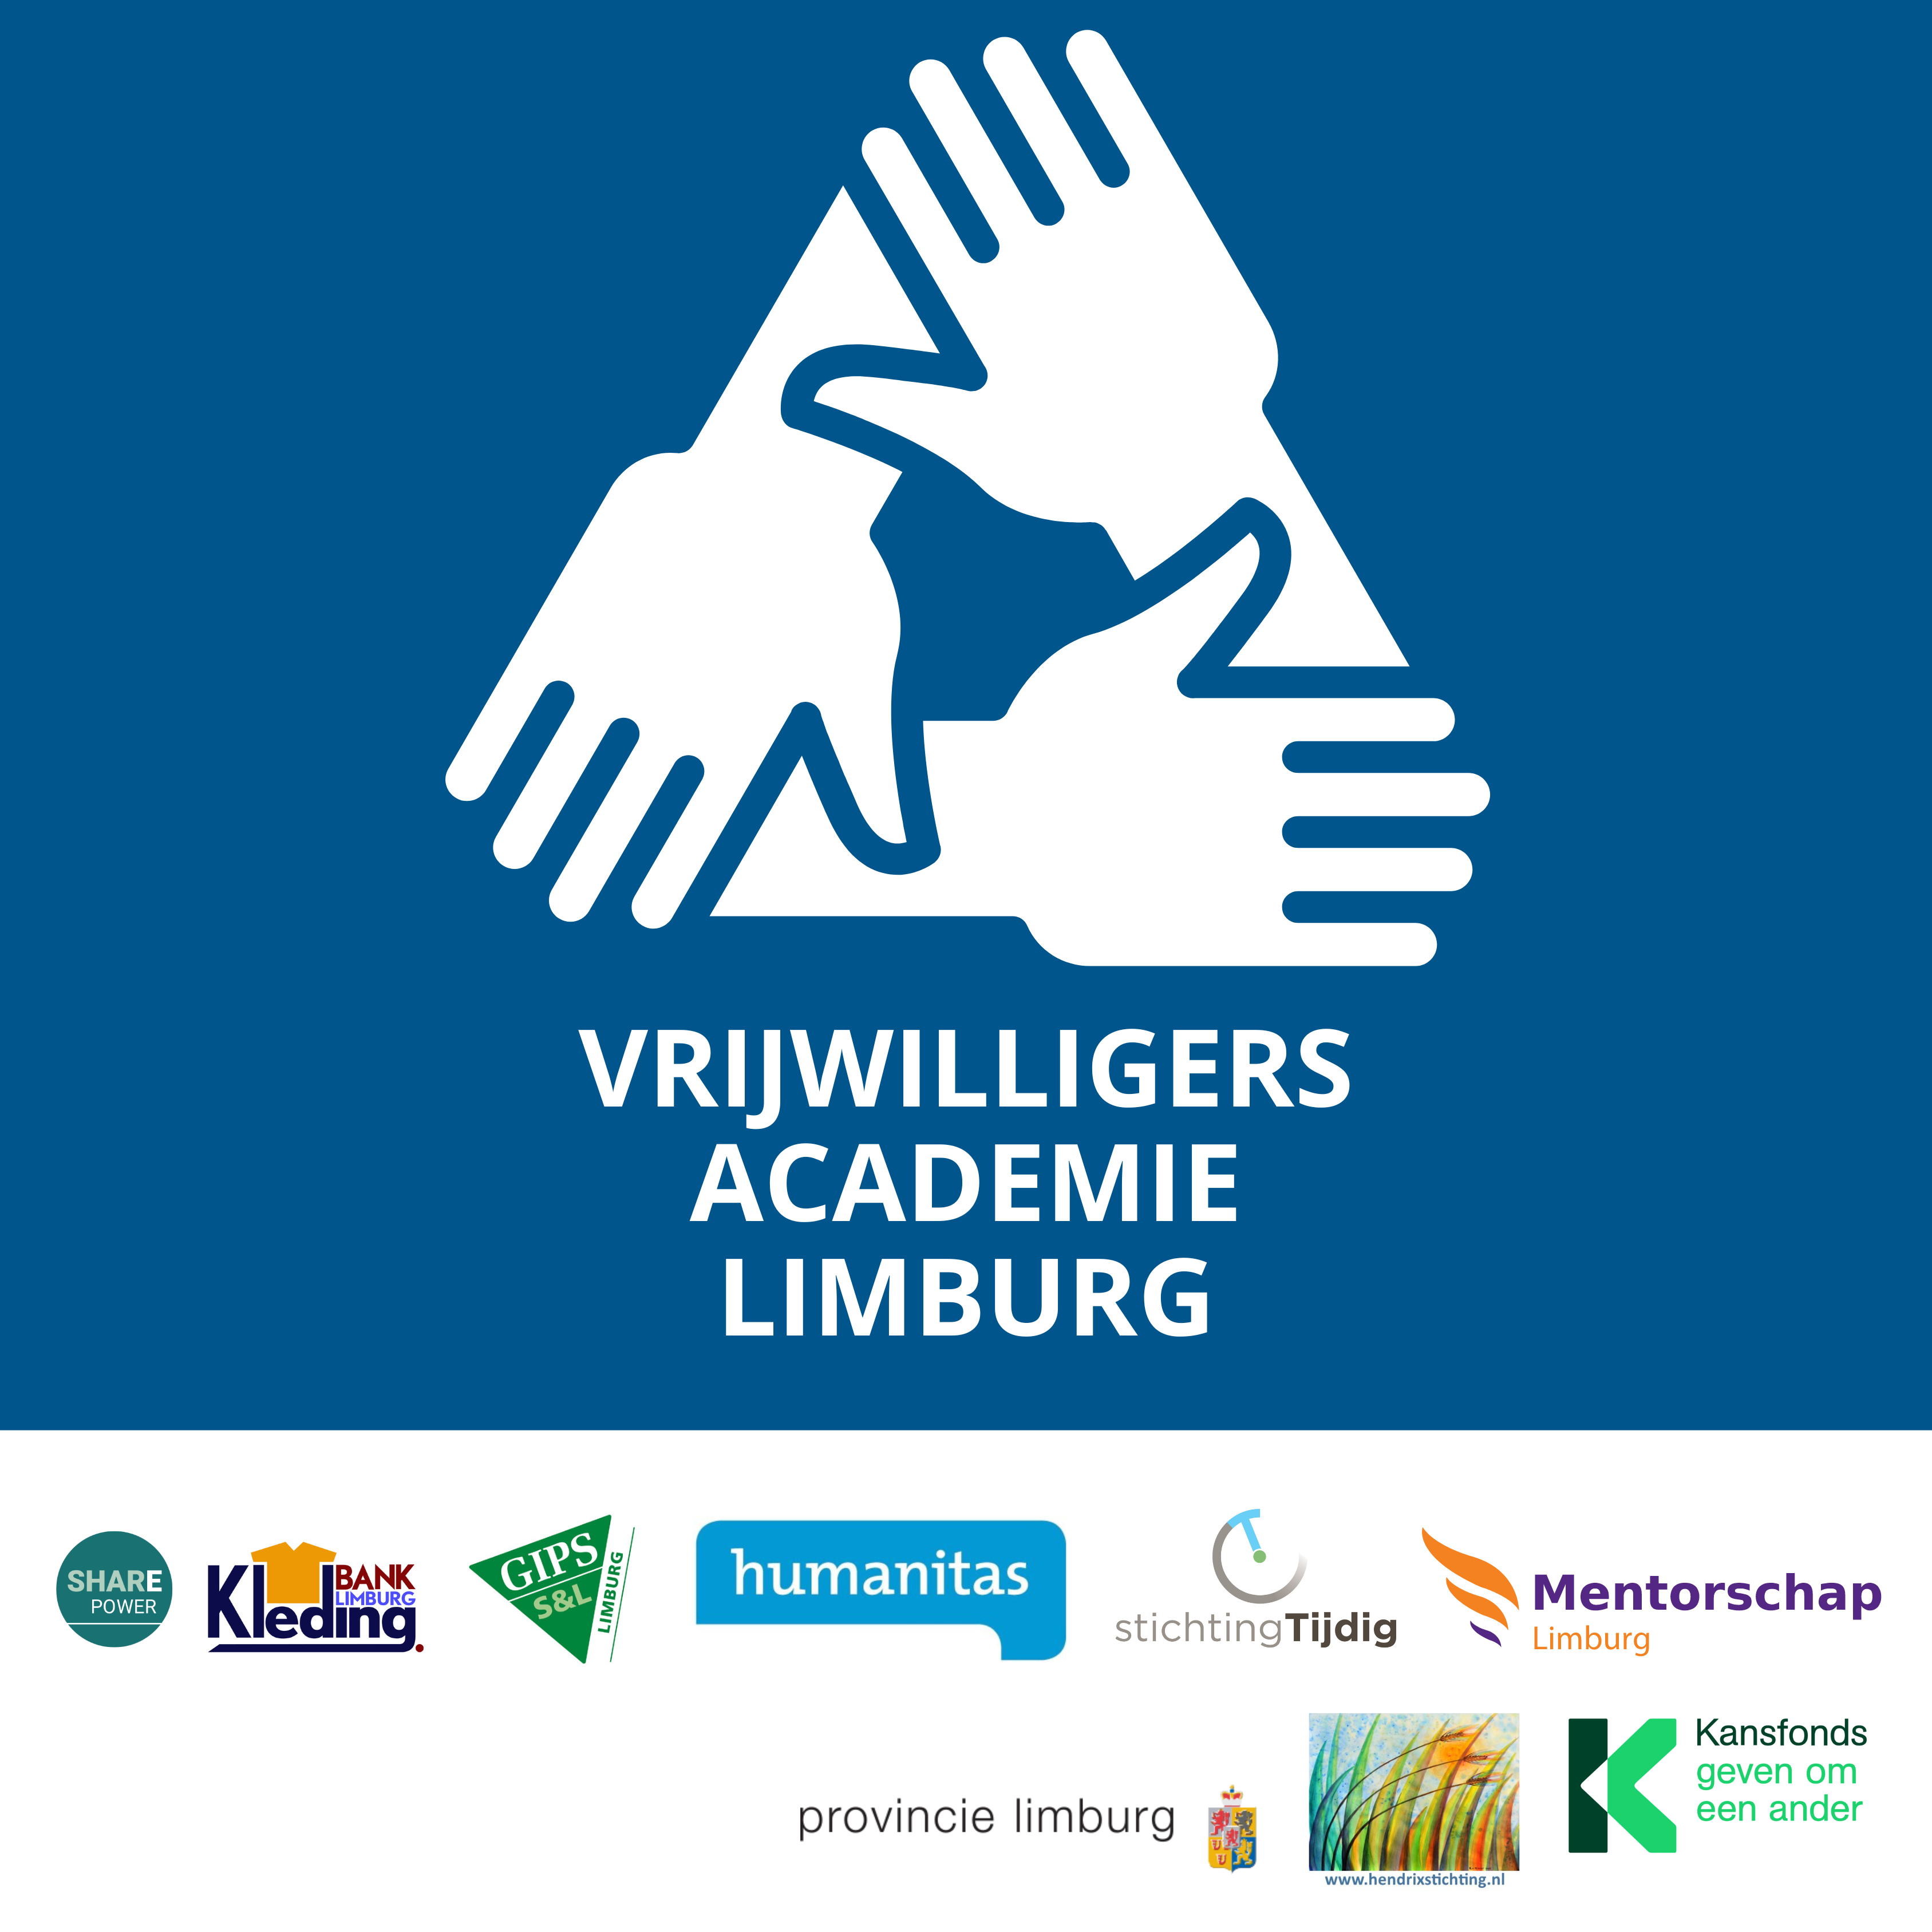 vrijwilligers-academie-limburg-1.png